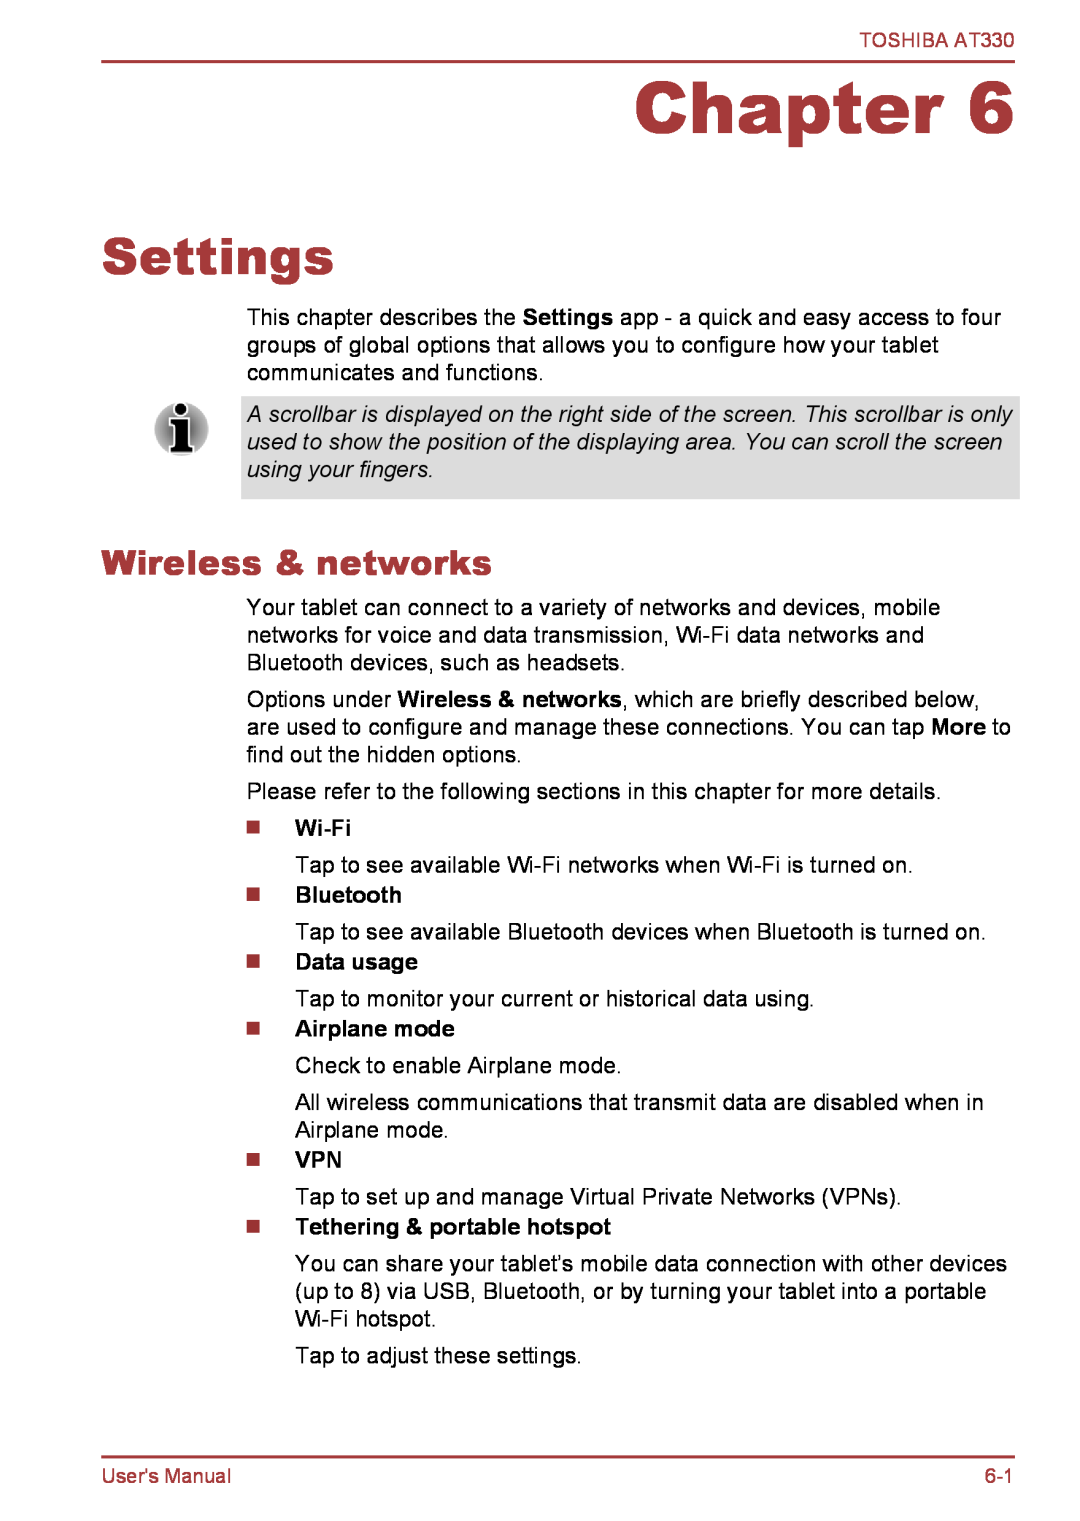 Toshiba at330 Settings, Wireless & networks, Data usage, Tethering & portable hotspot, Chapter, Wi-Fi, Bluetooth 